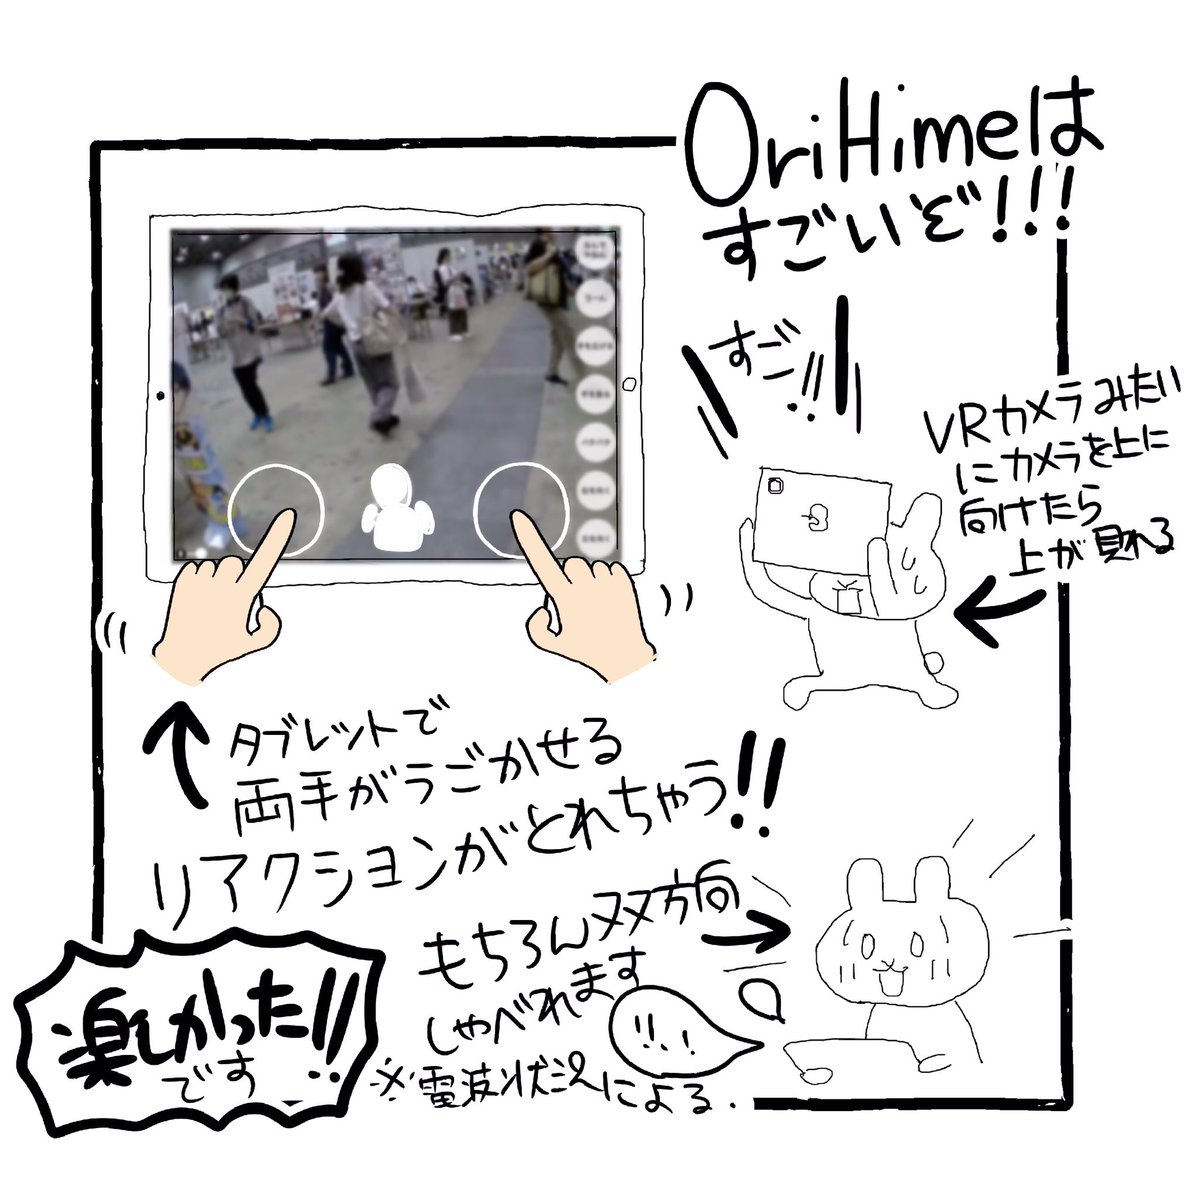 OriHimeコミティア体験記
#orihime
無茶苦茶楽しかったし現地の楽しさが伝わってきました!リアルでも行きたいです! https://t.co/oeRCXvK8MS 